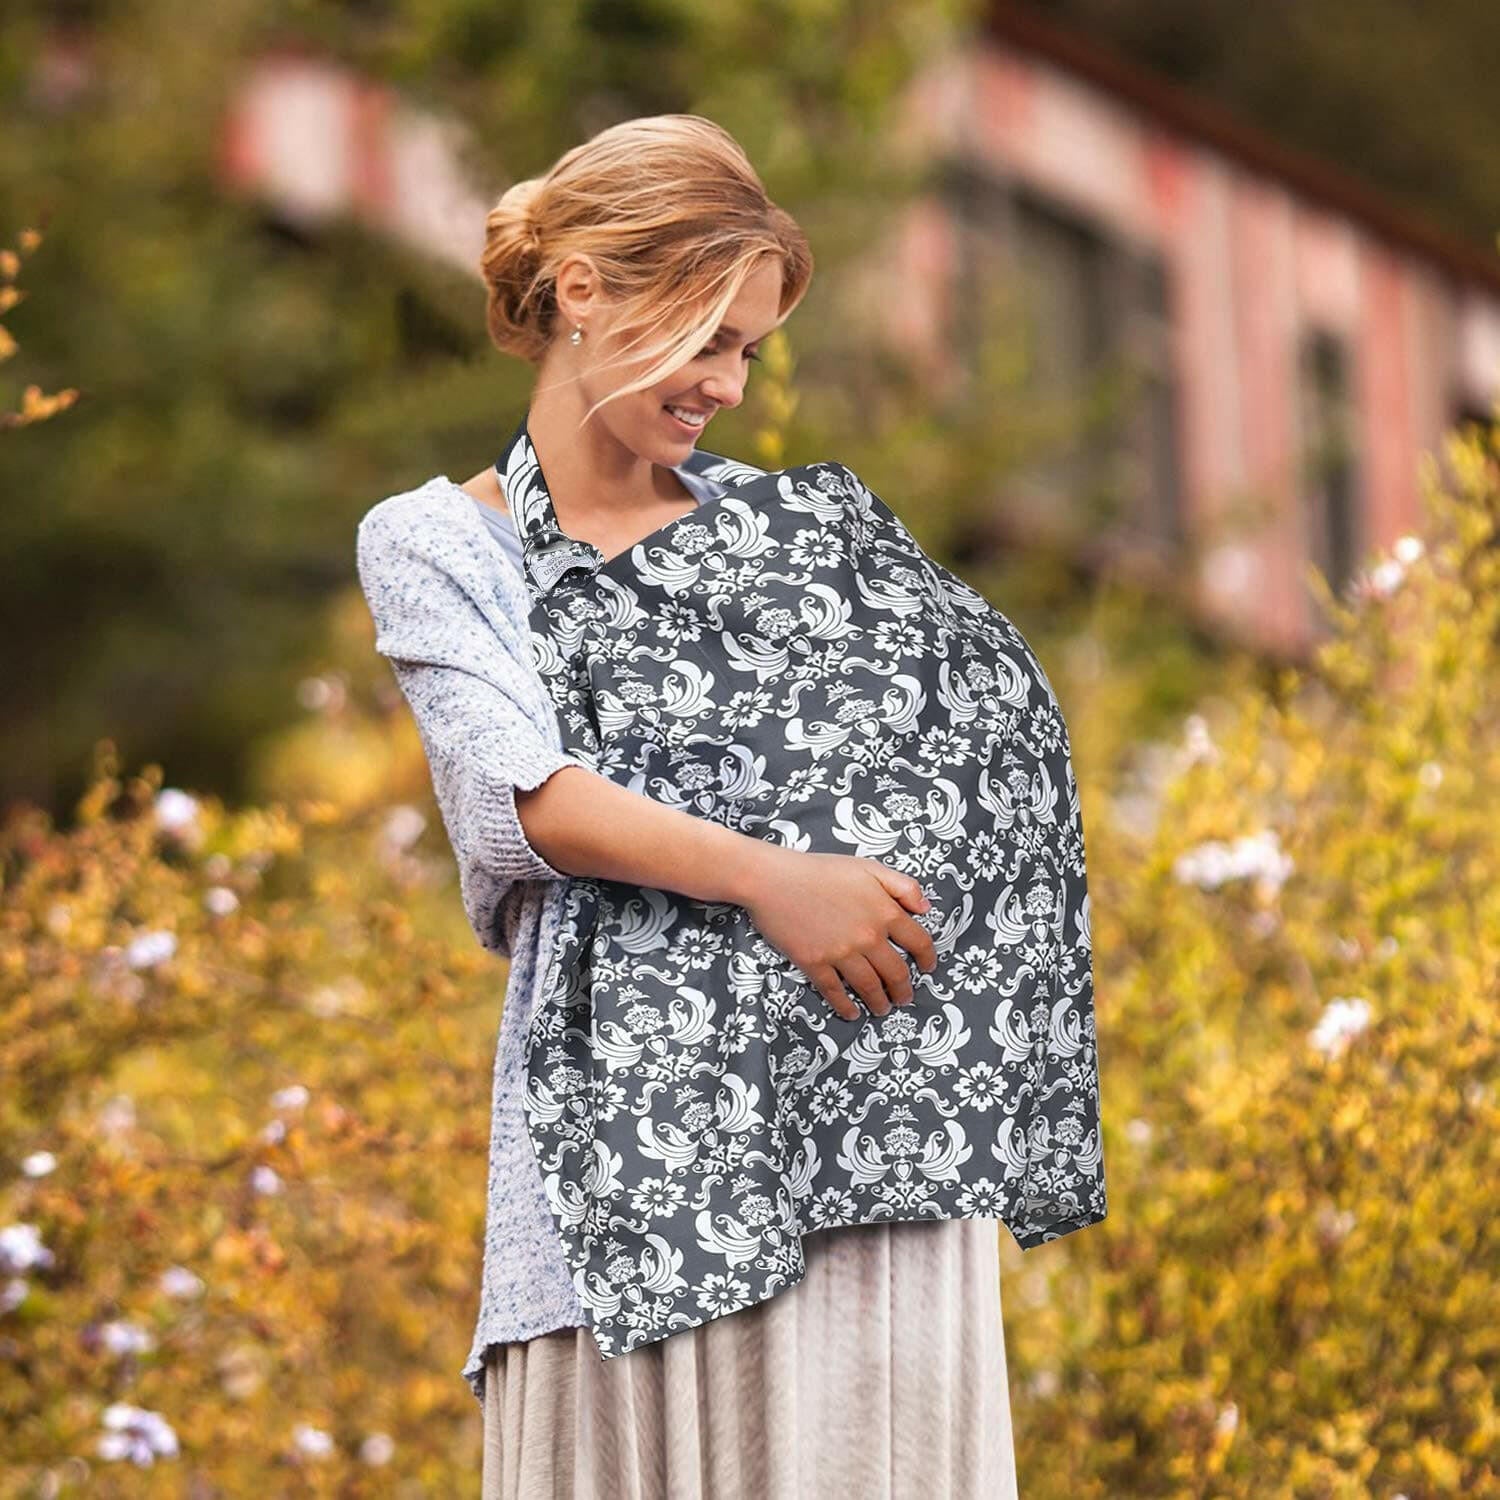 UHINOOS Nursing Cover,Infinity Soft Breastfeeding Cotton for Babies.